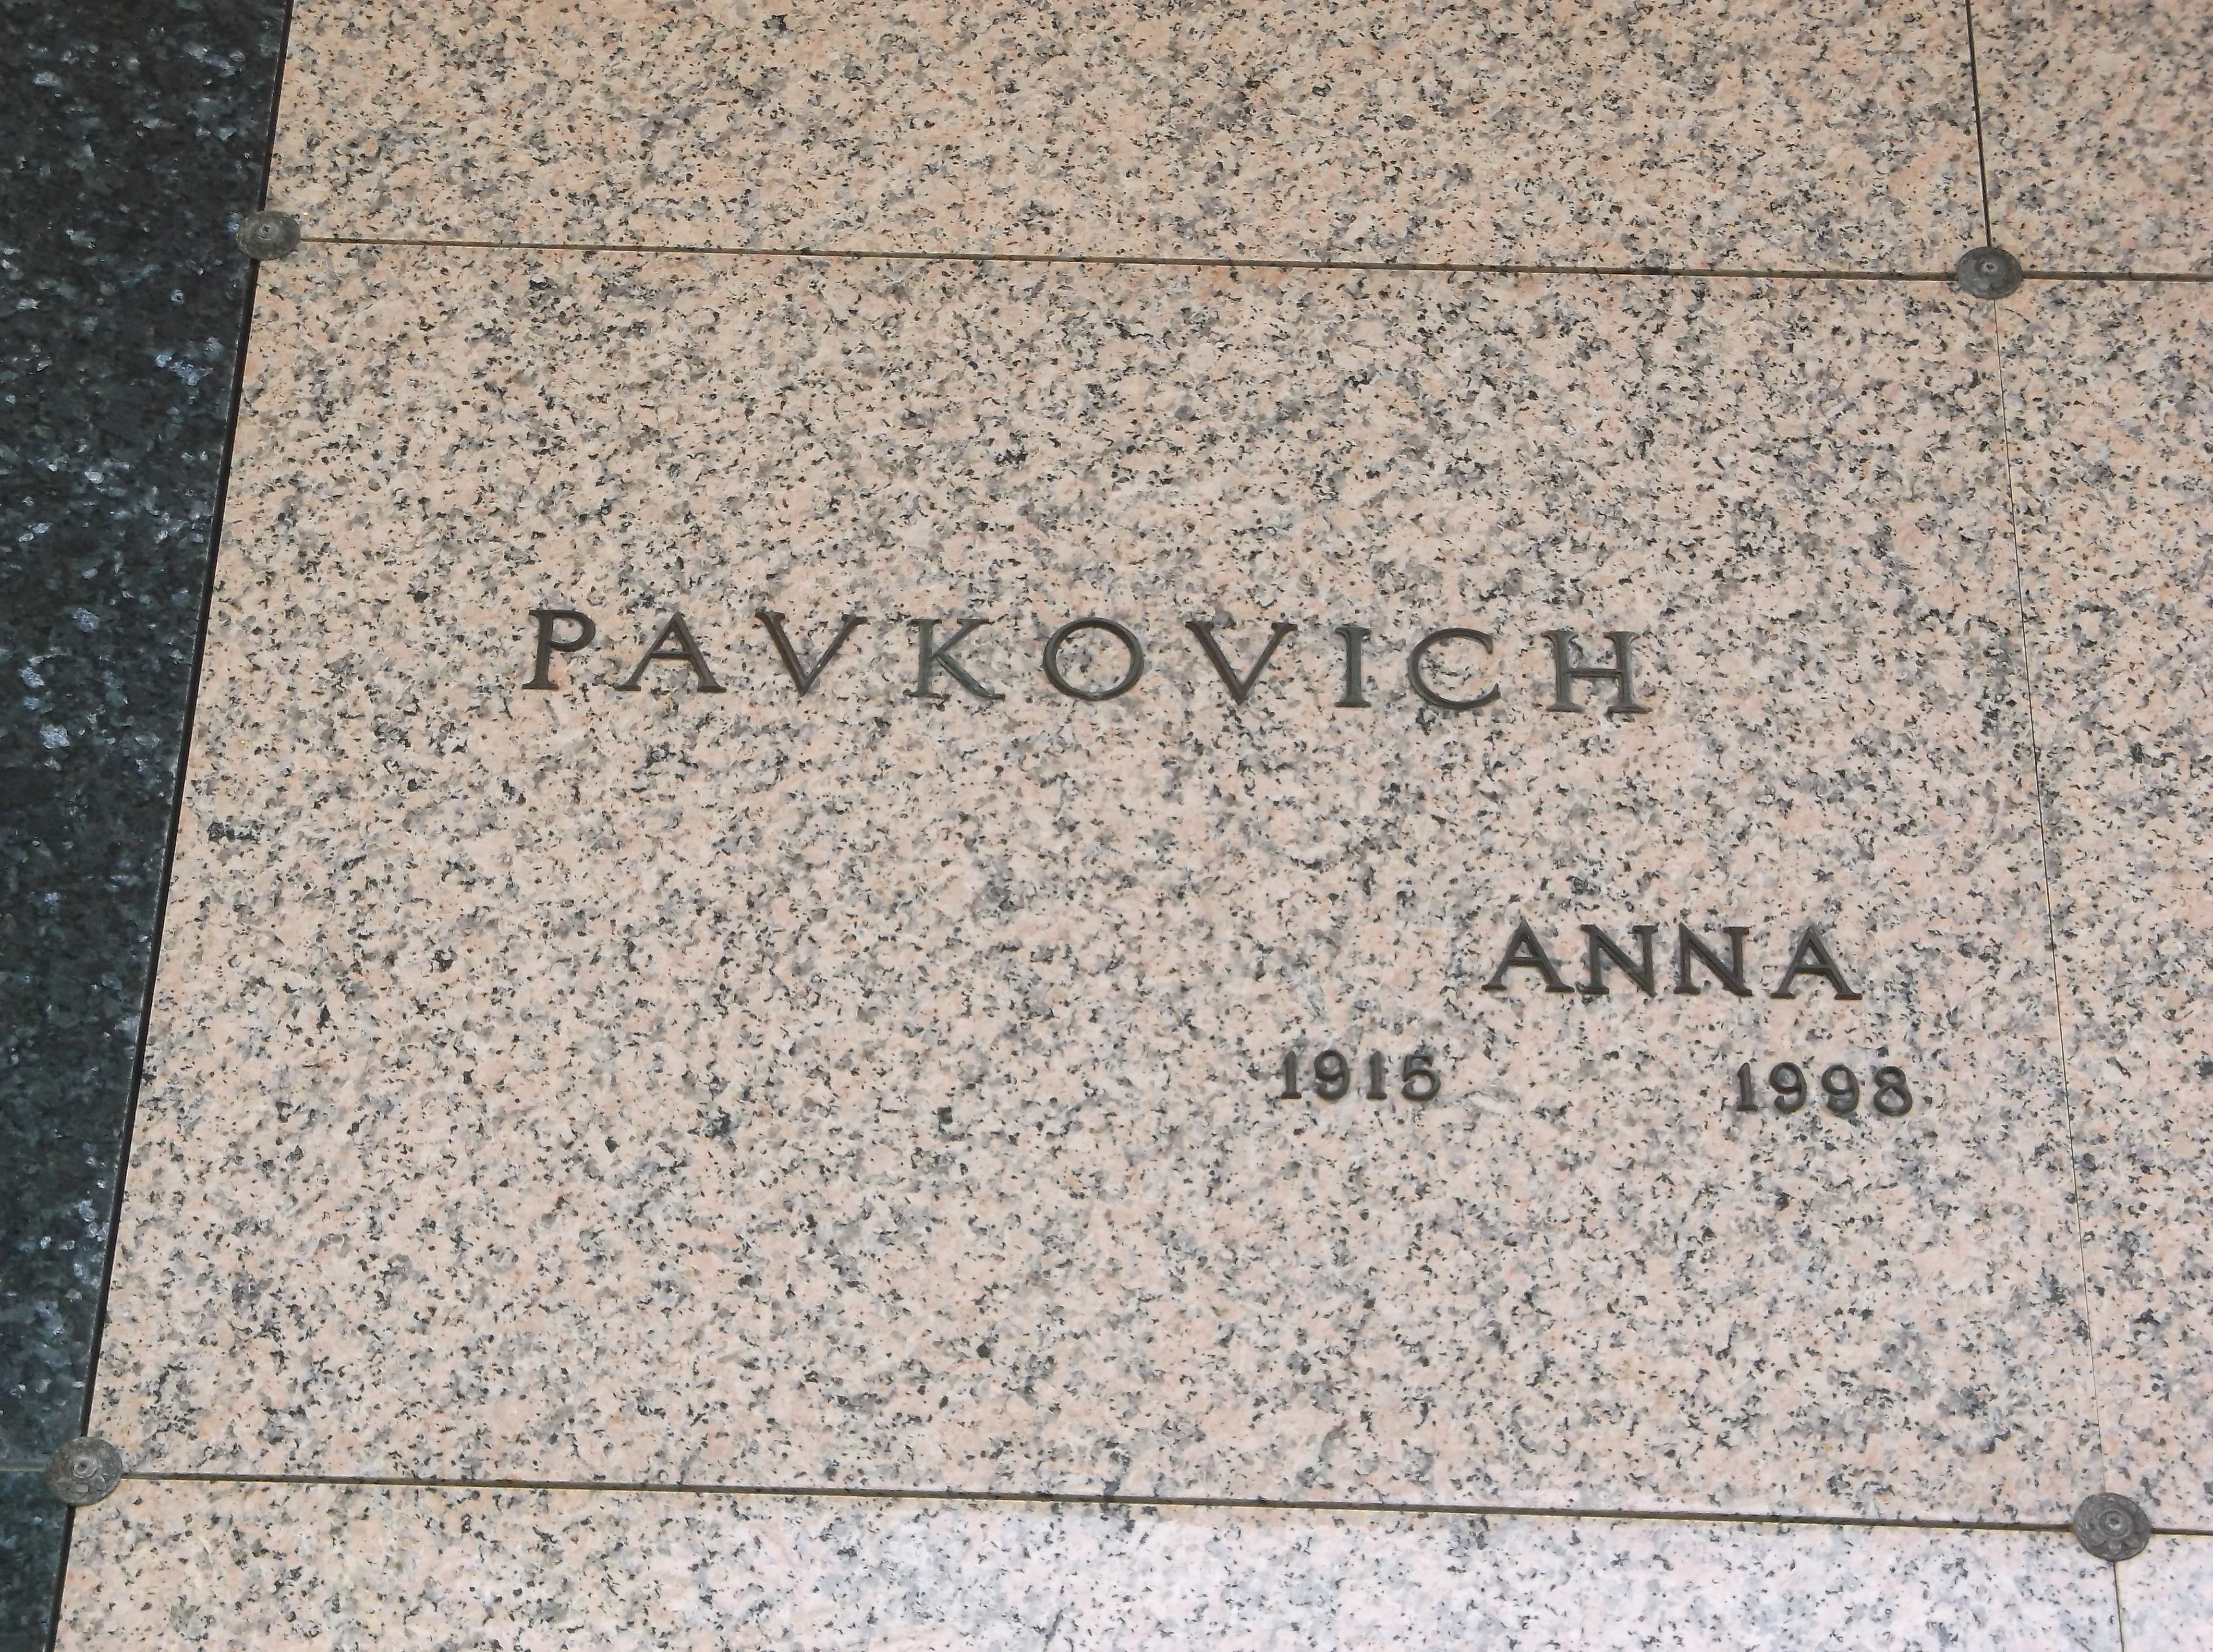 Anna Pavkovich